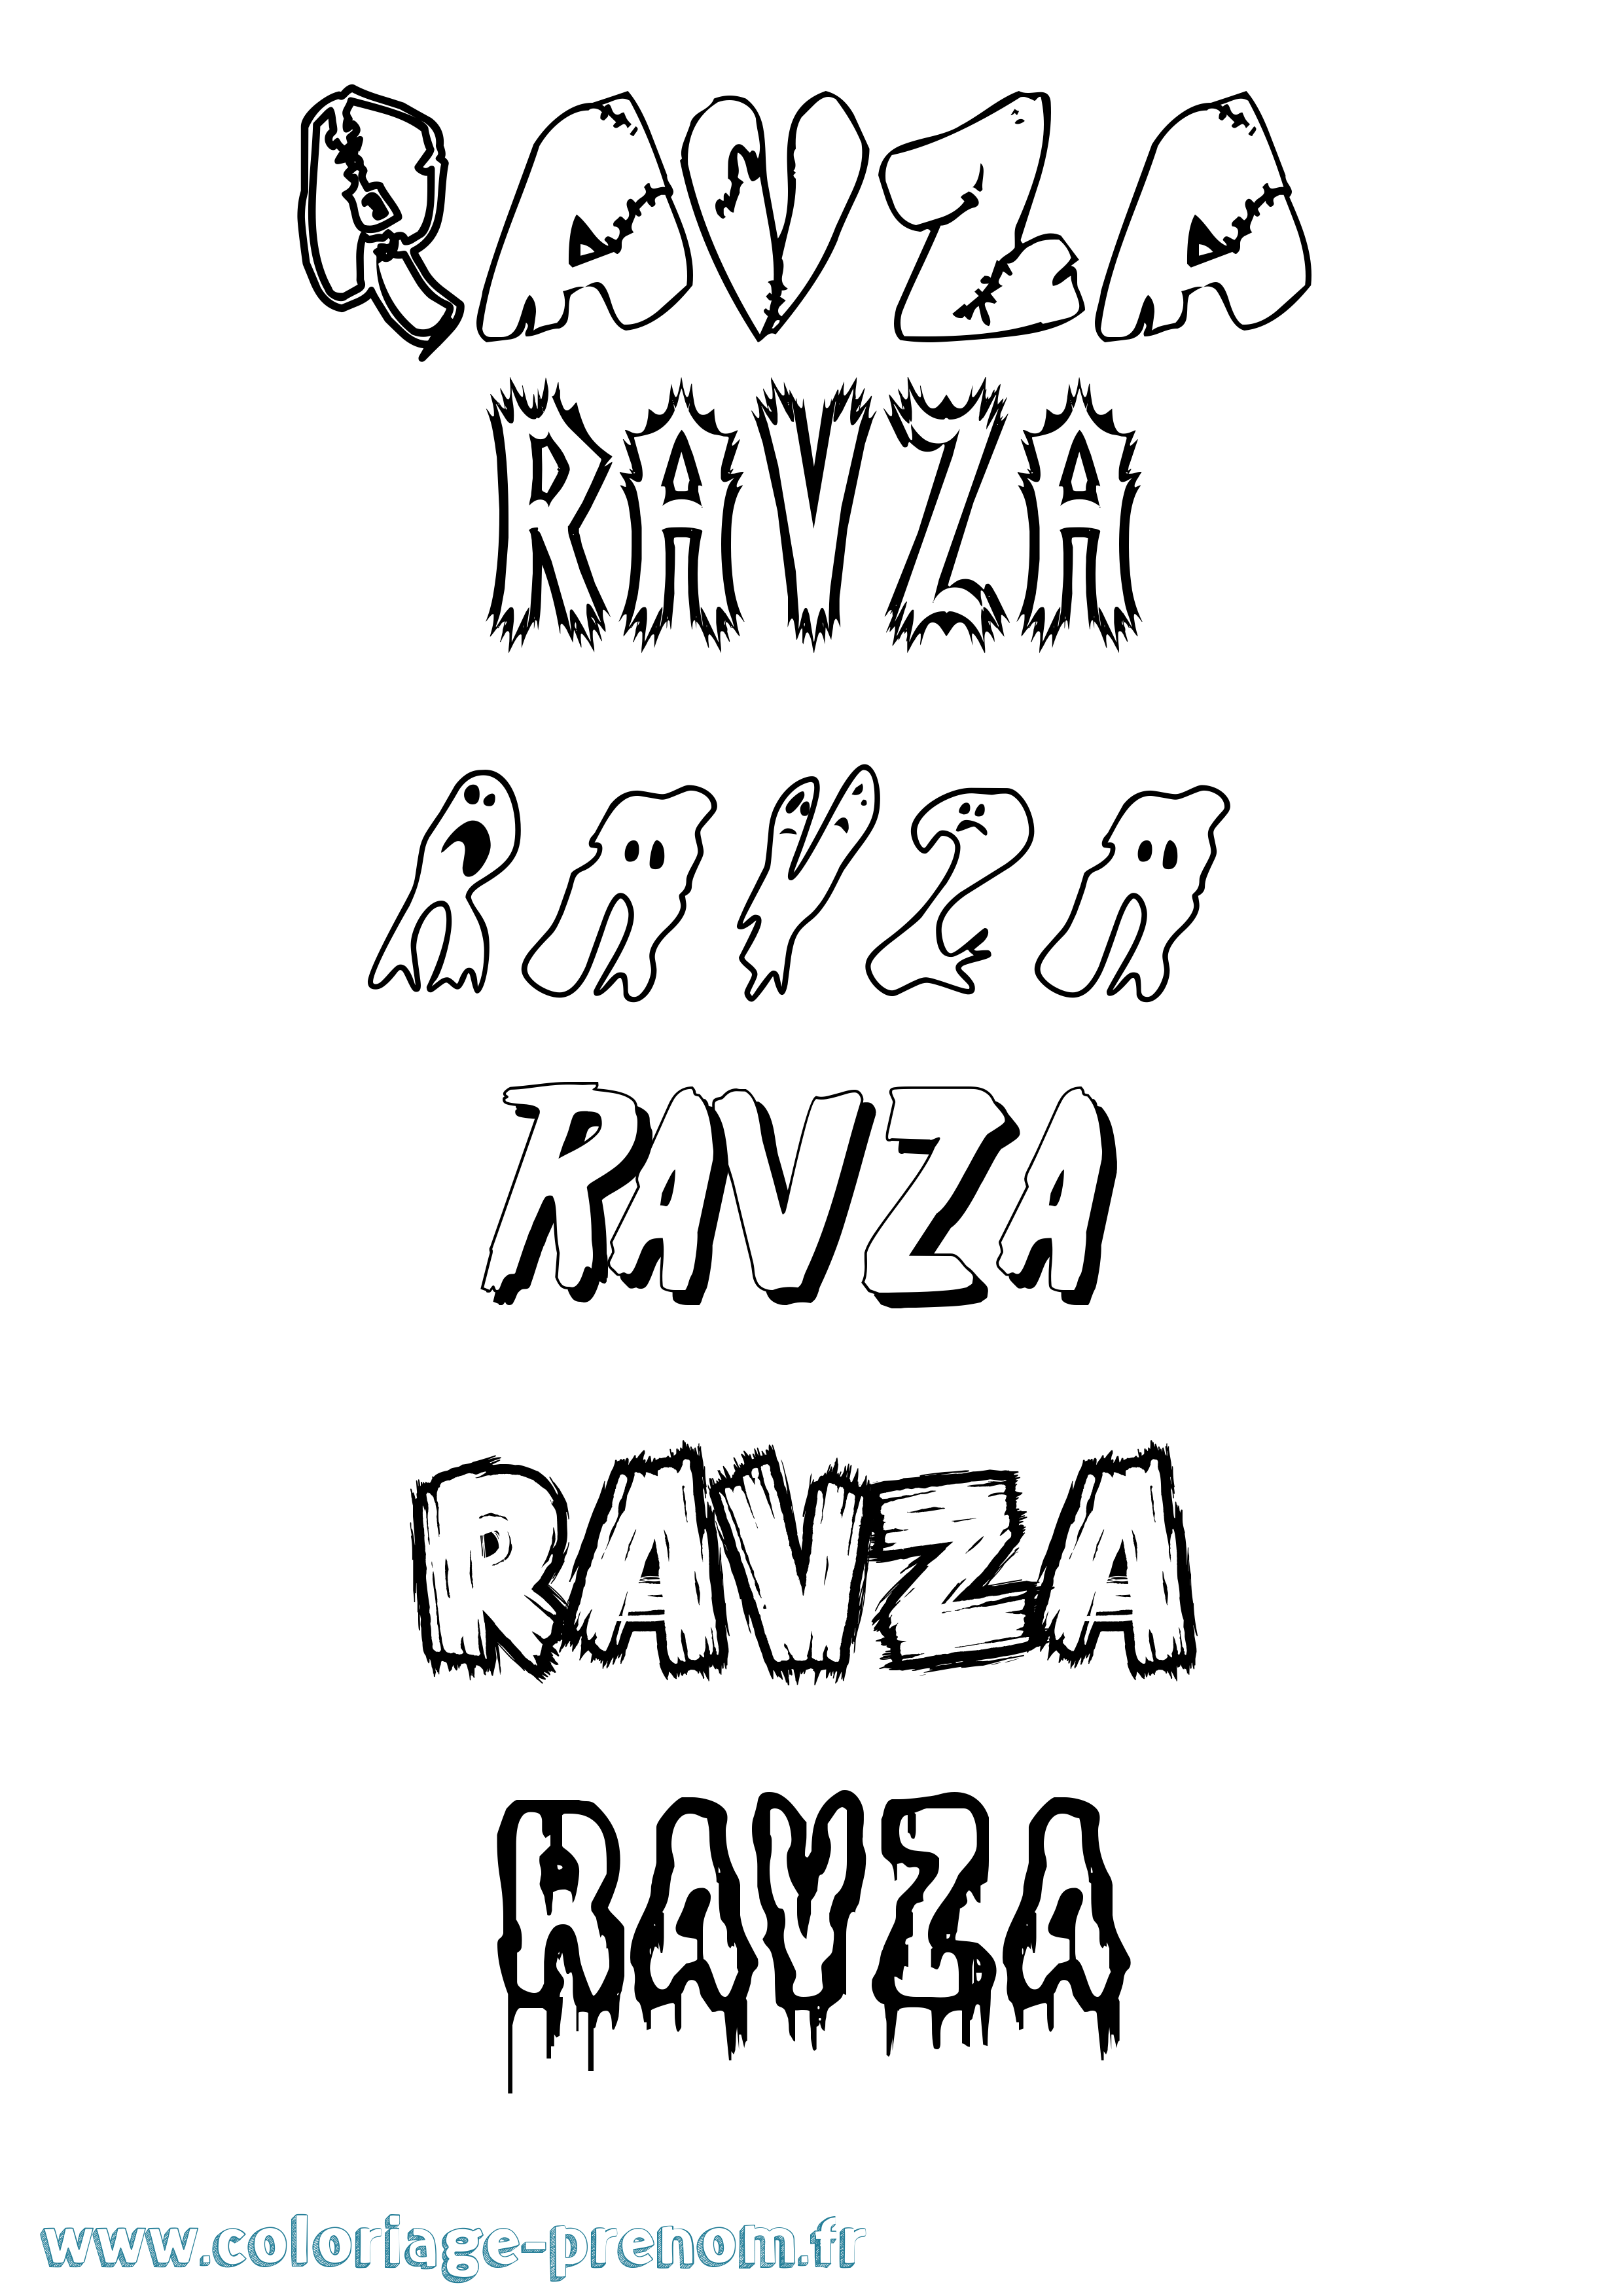 Coloriage prénom Ravza Frisson